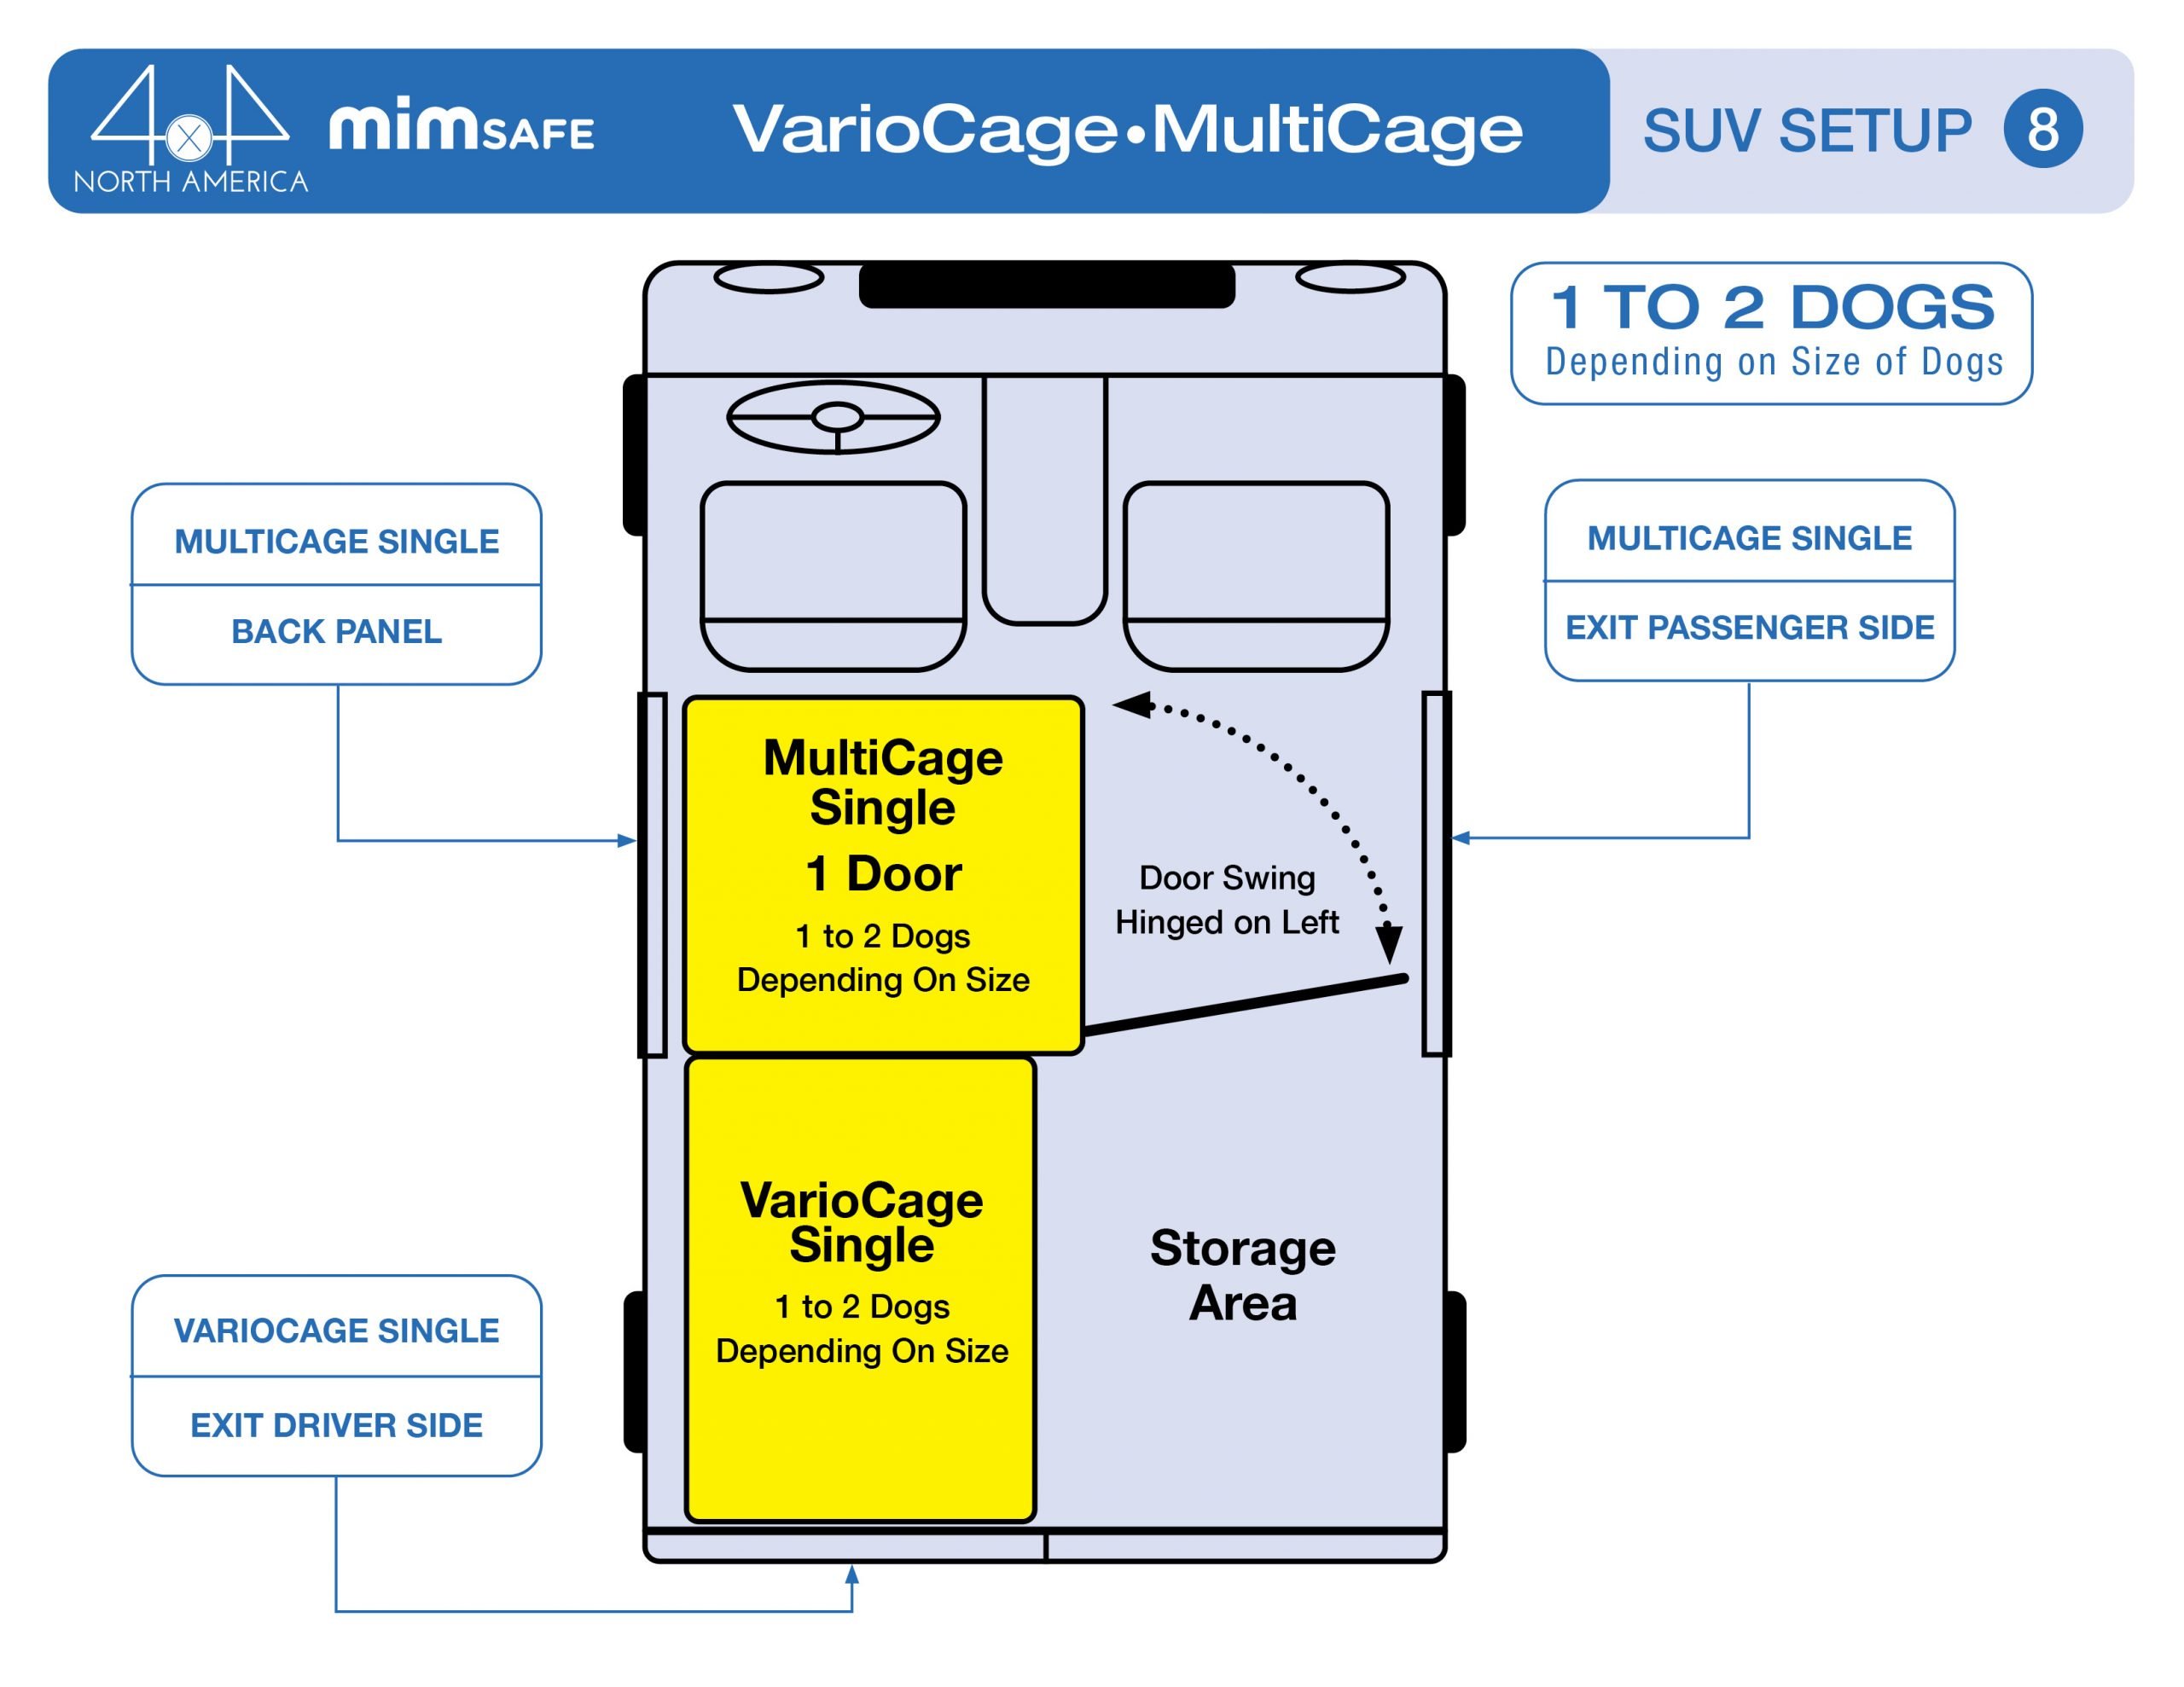 MIM Safe Variocage Double - 4x4 North America